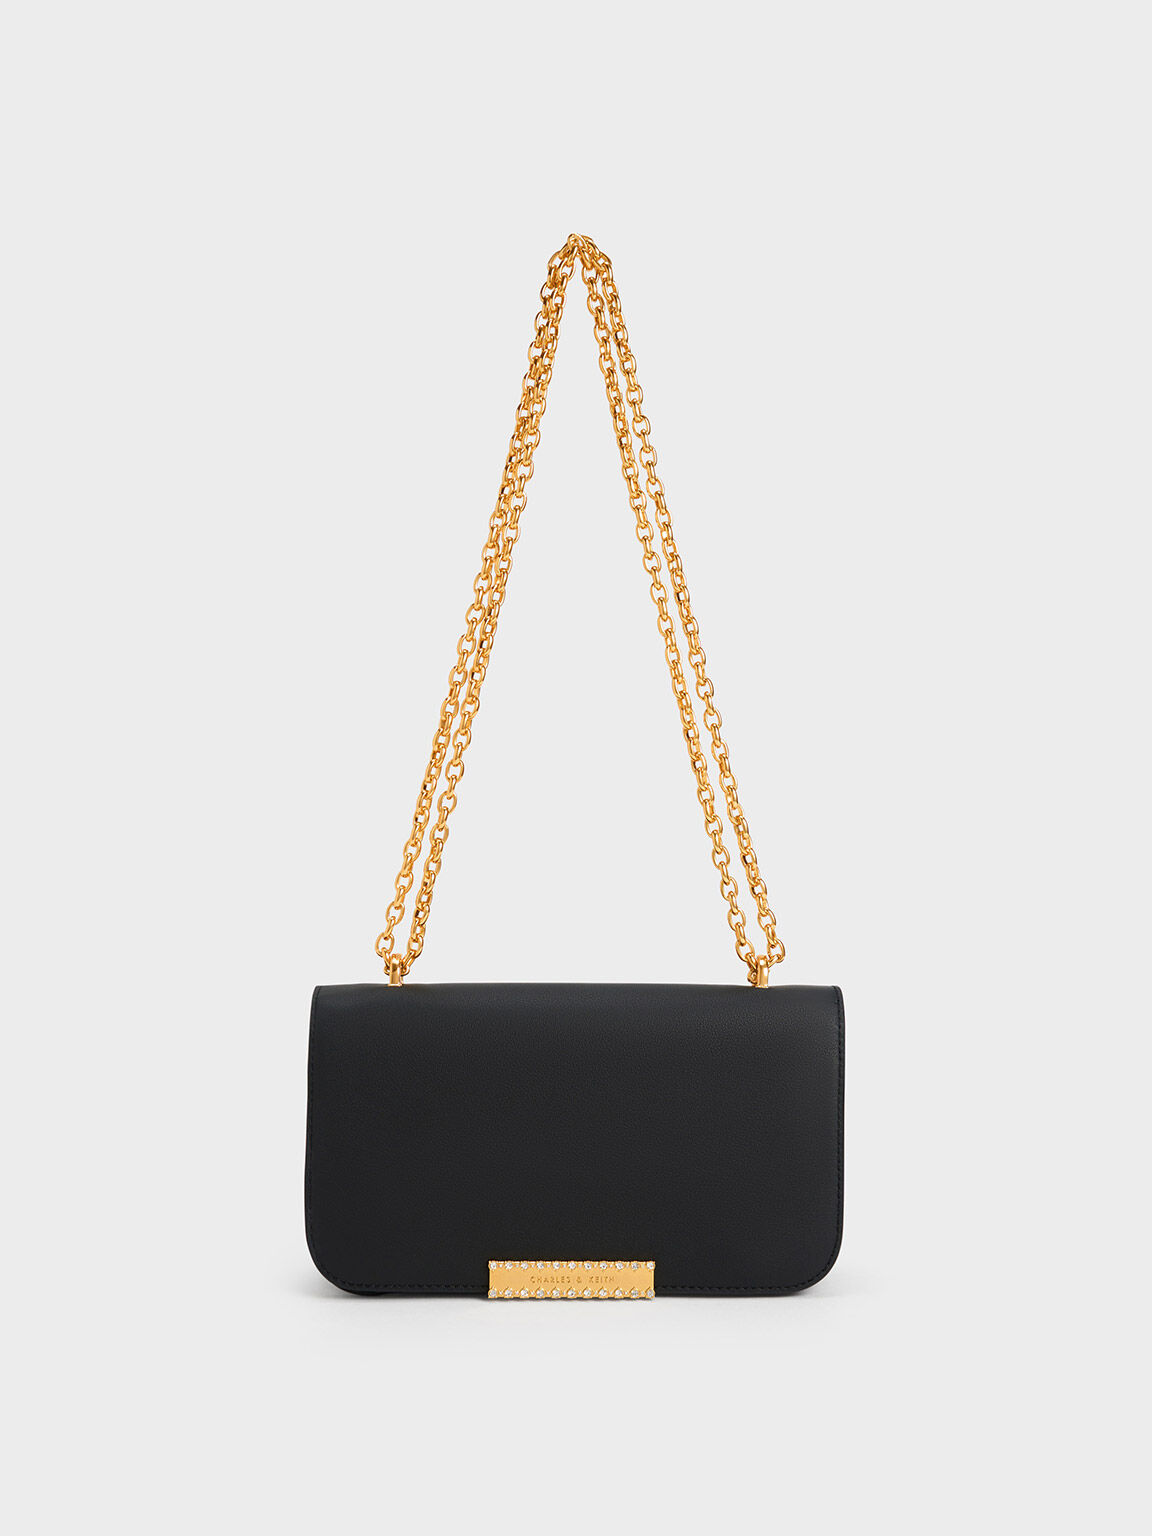 Leather Chain Strap Bag, Black, hi-res